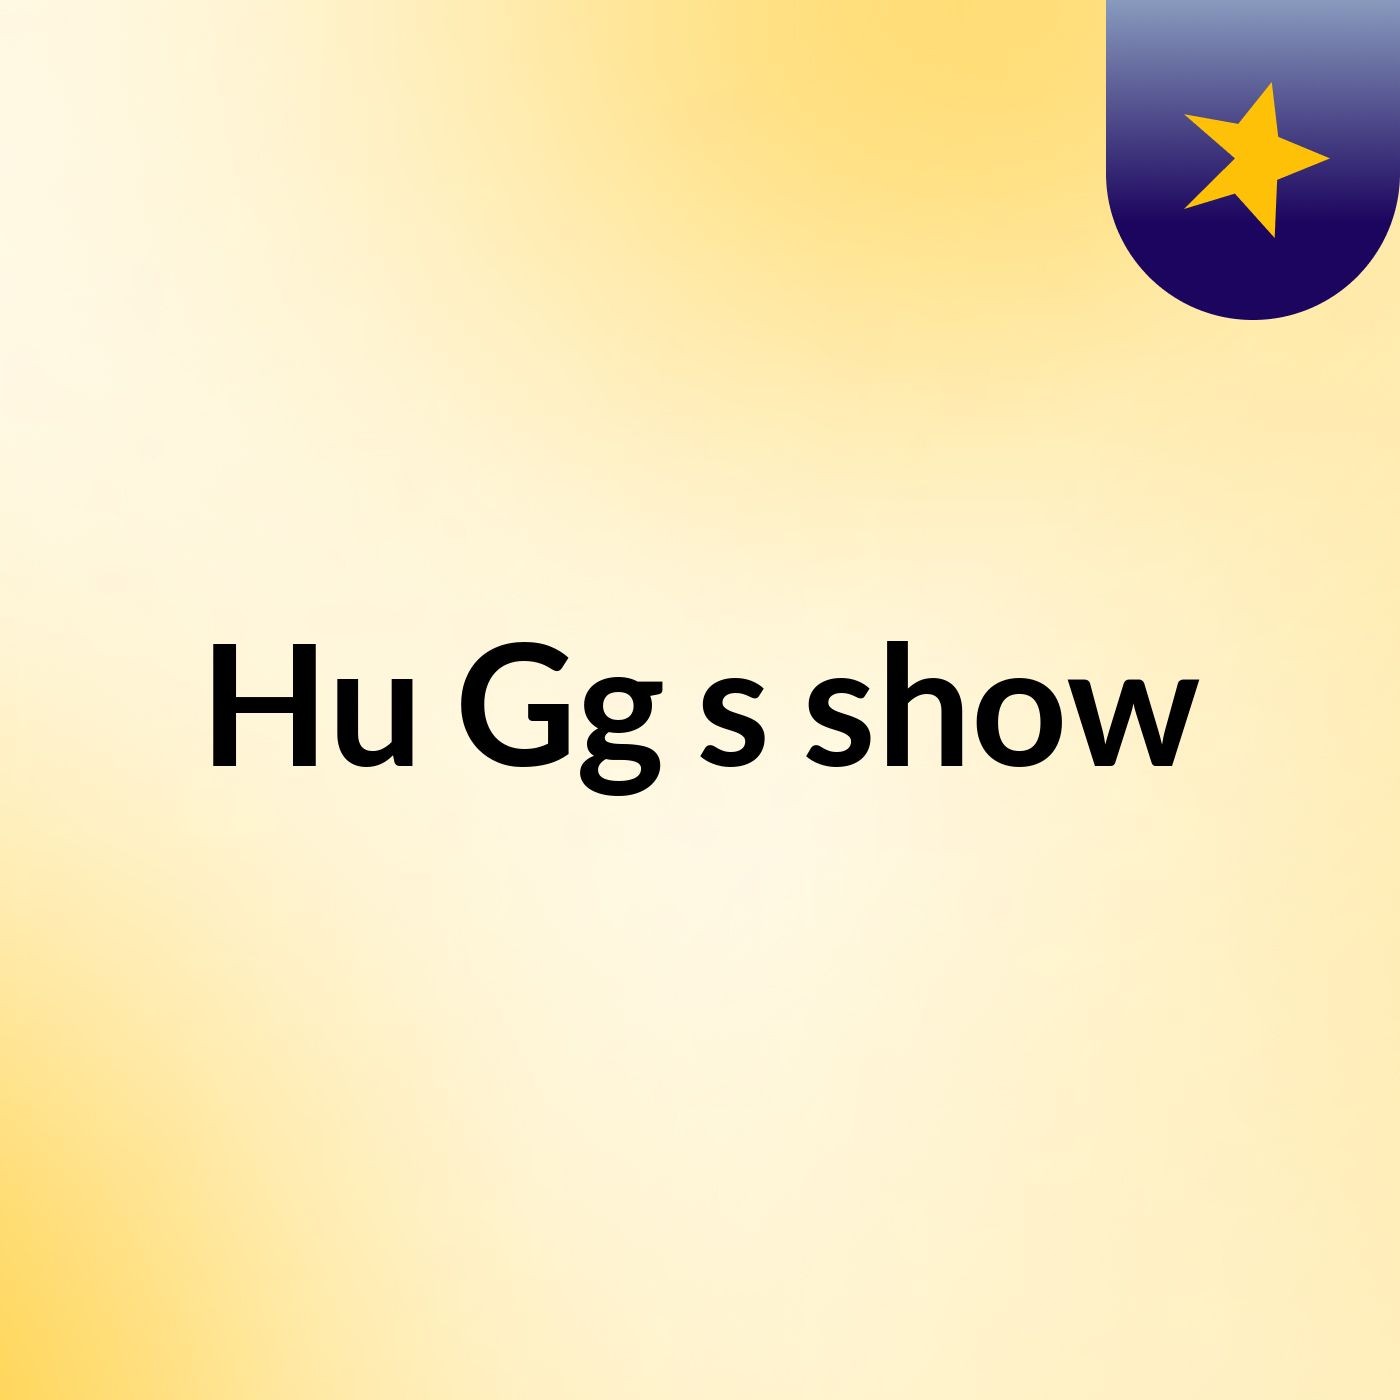 Hu Gg's show